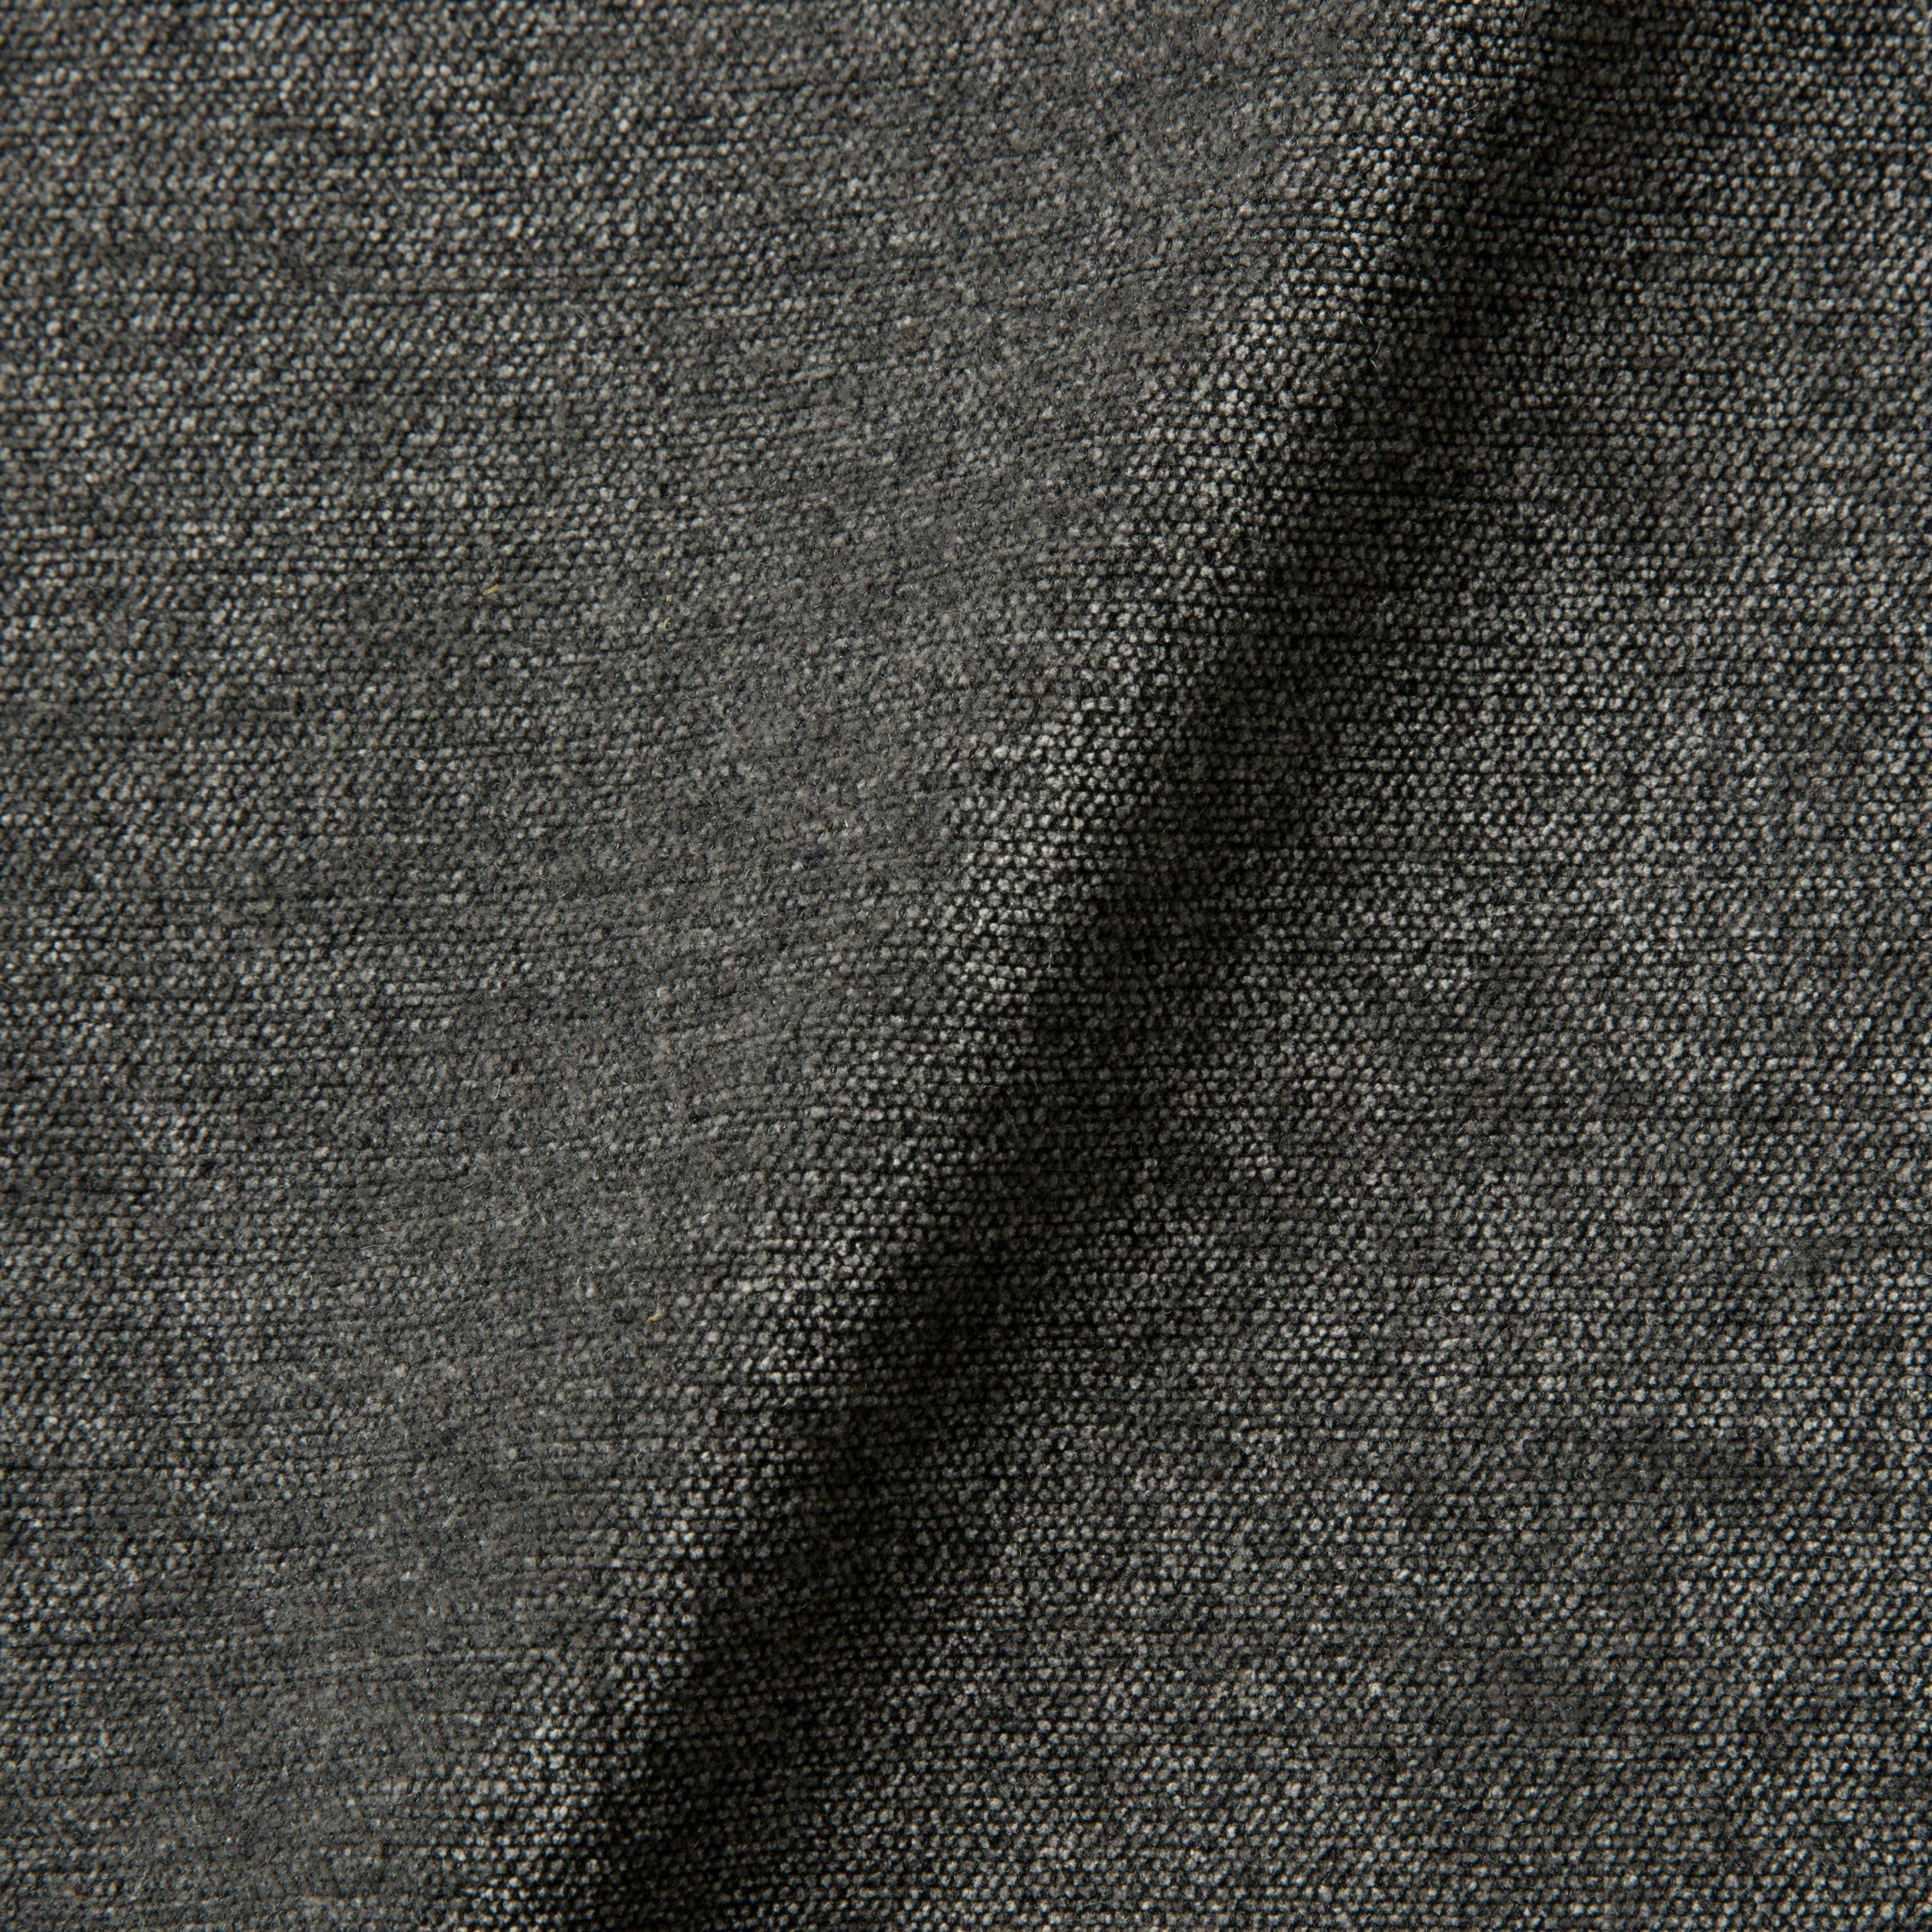 Fabric sample Liscio Muscio grey